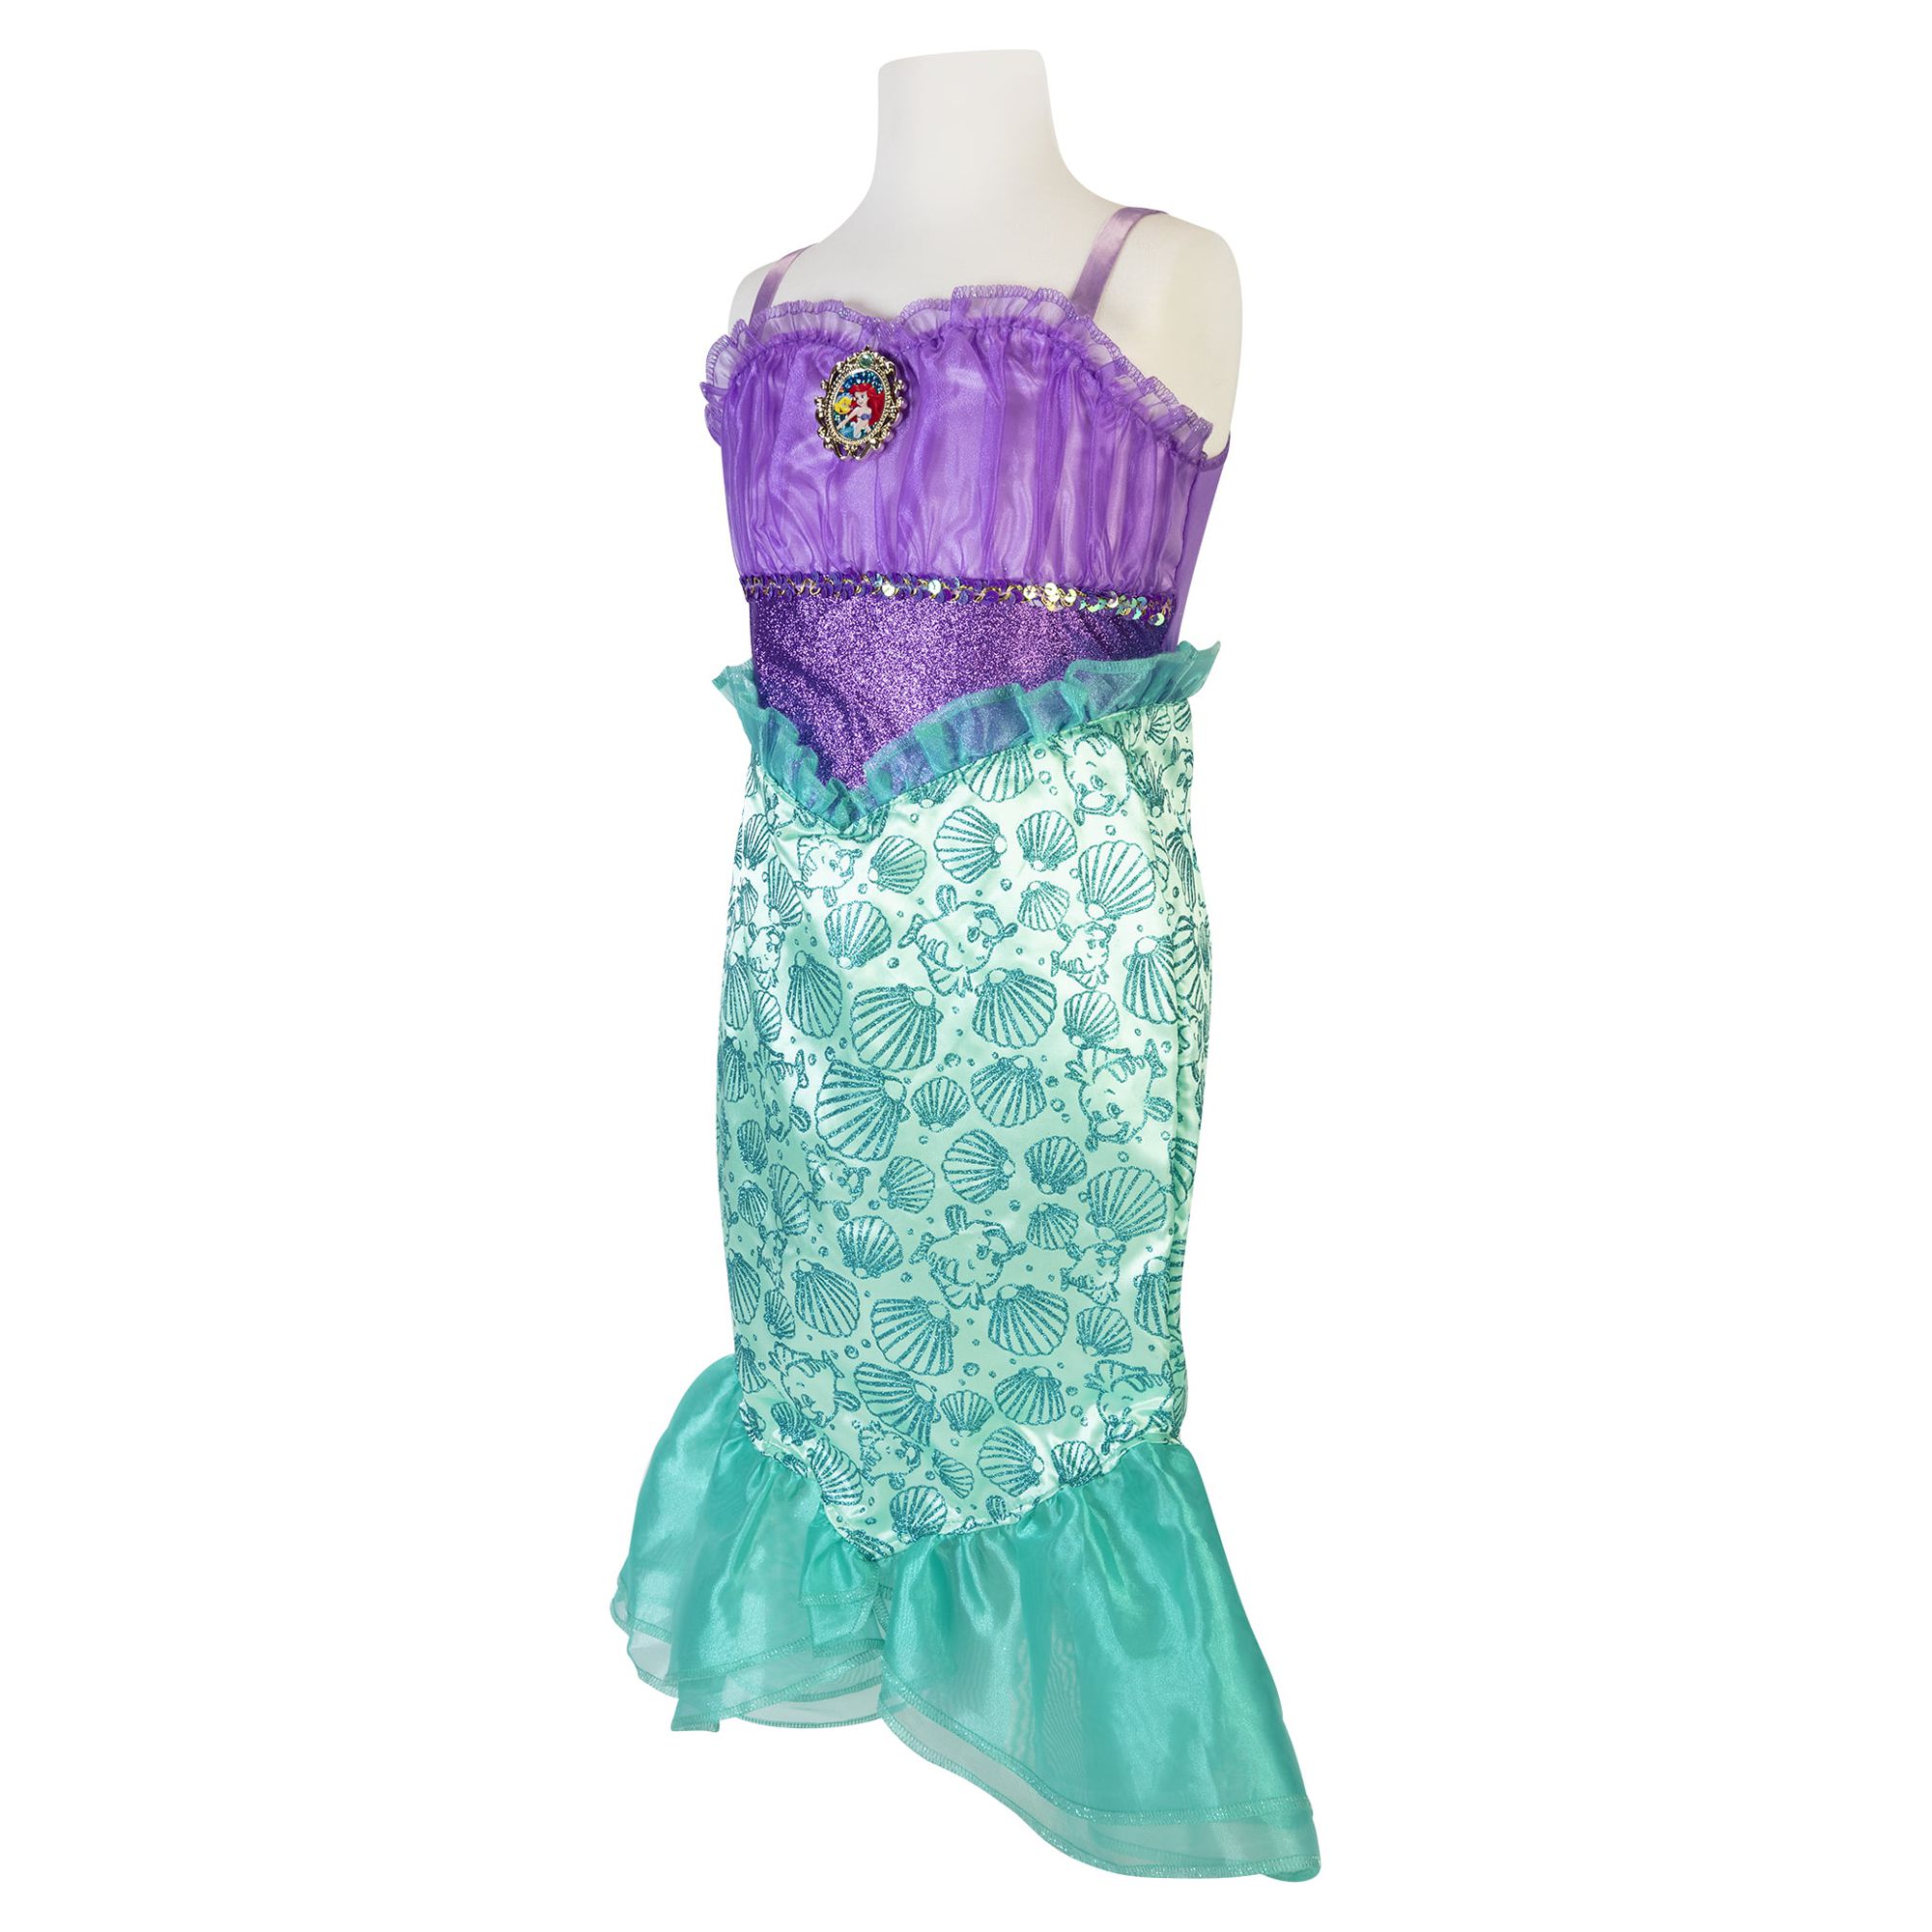 Disney Princess Ariel Children's Dress Perfect for Halloween or Dress Up - image 4 of 6